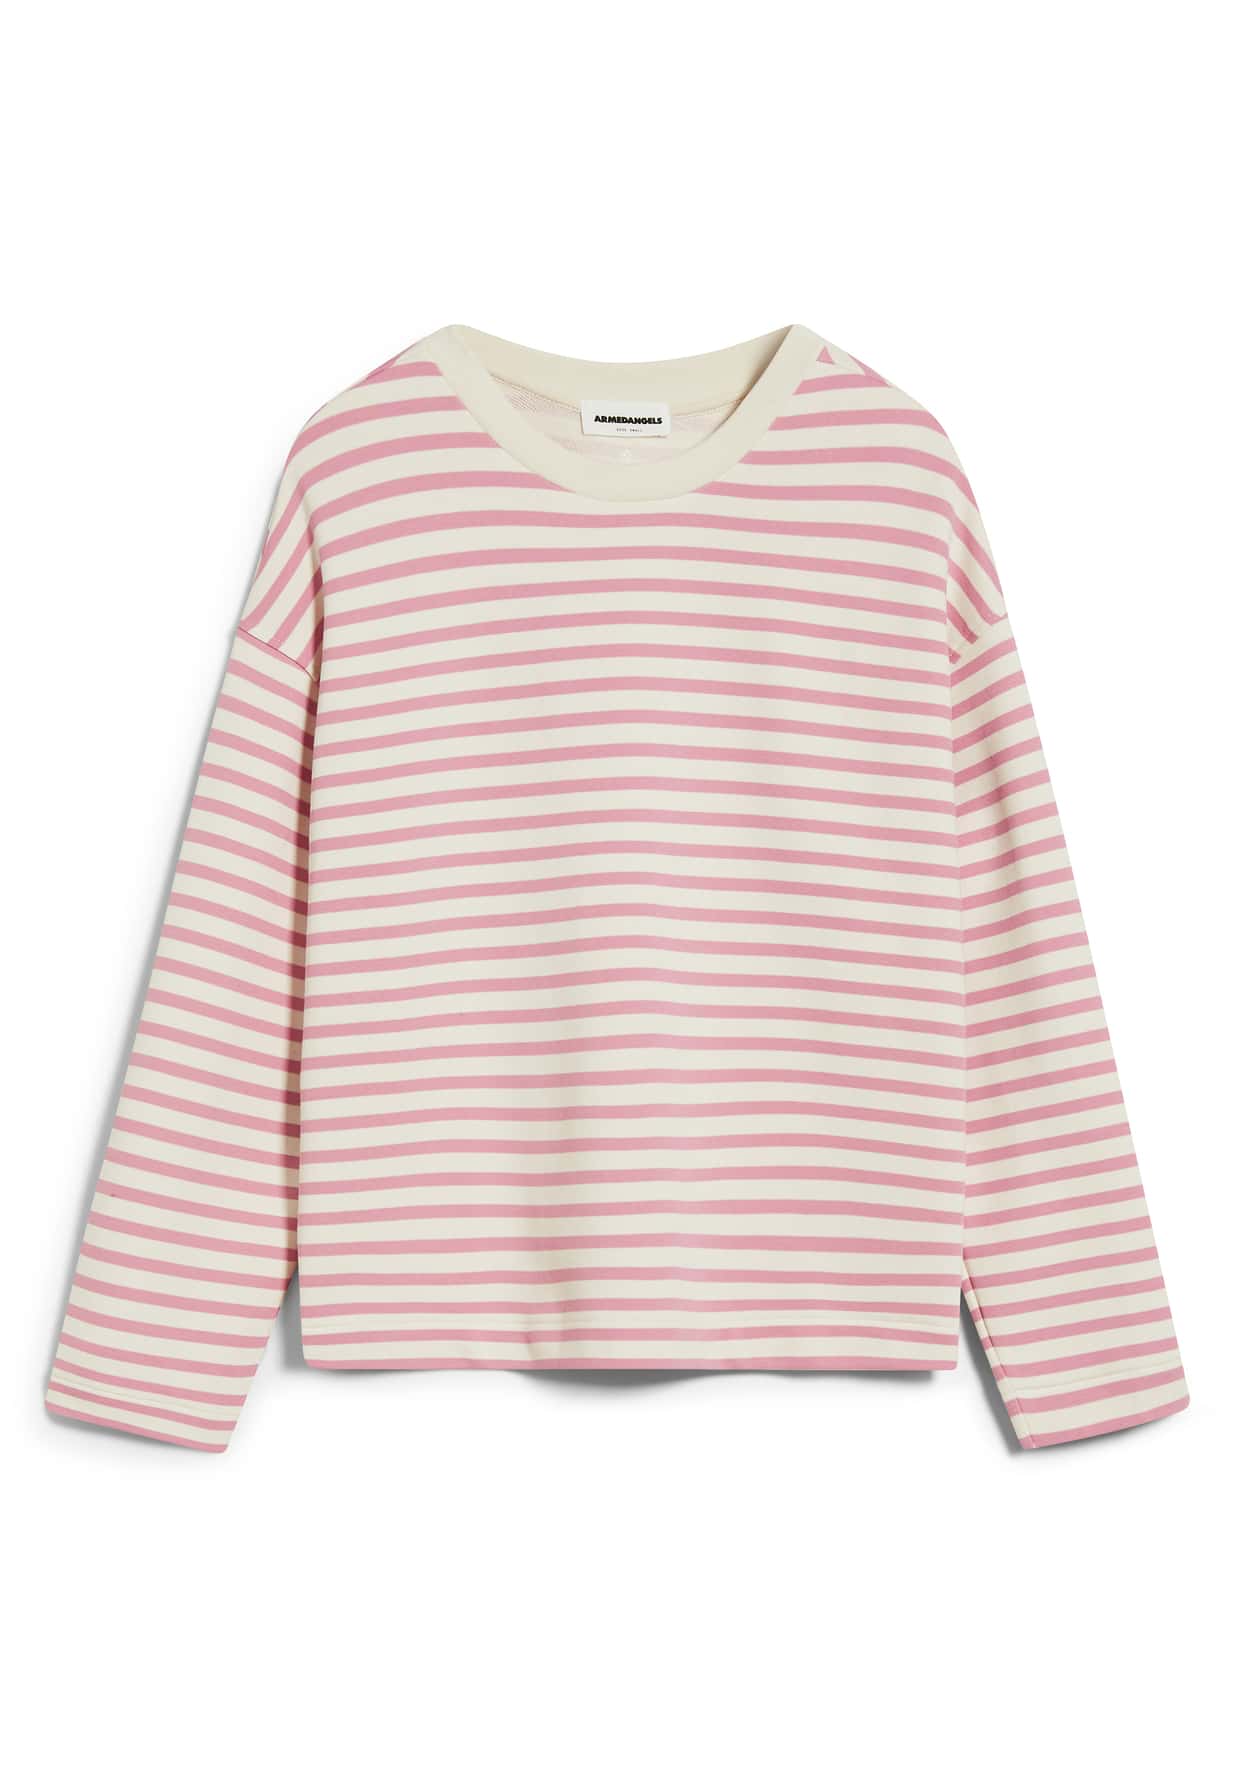 Armedangels Frankaa Sweatshirt Stripe Raspberry Pink - Undyed